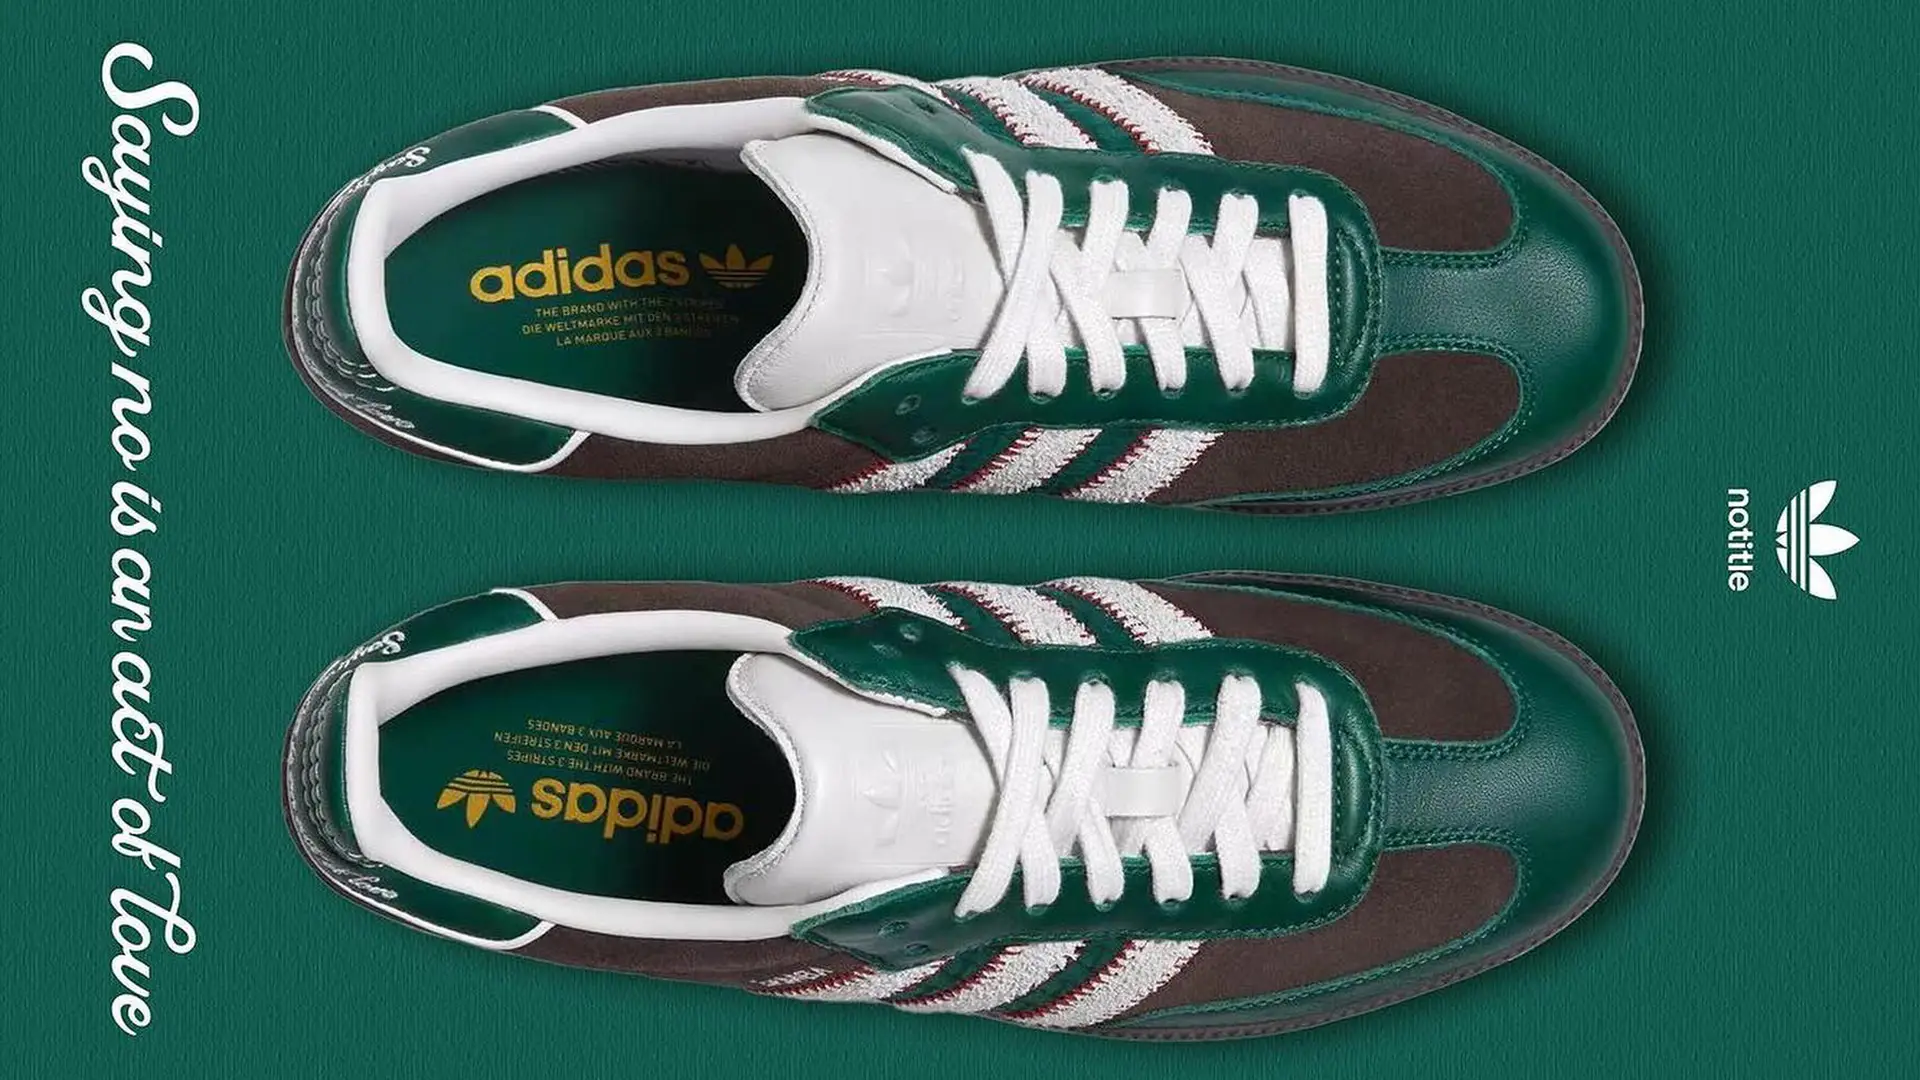 adidas predator soccer cleats amazon shoes